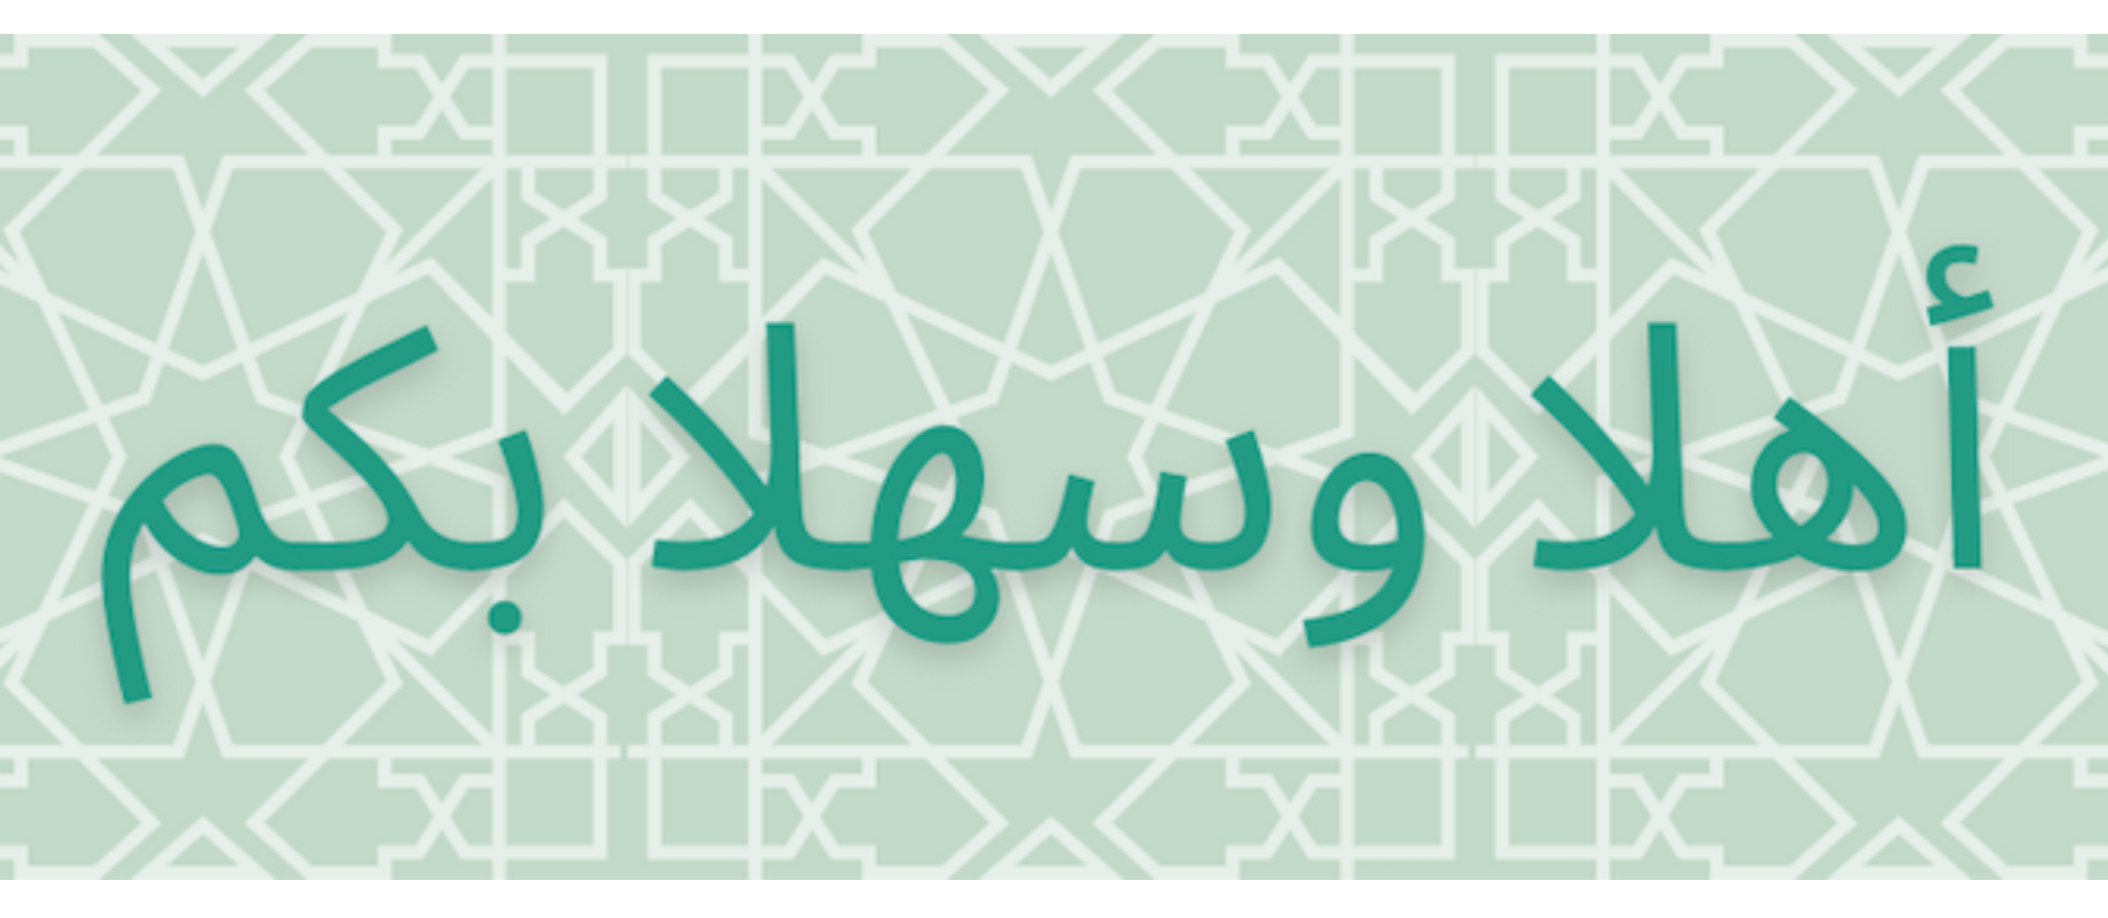 Arab American Heritage Month logo